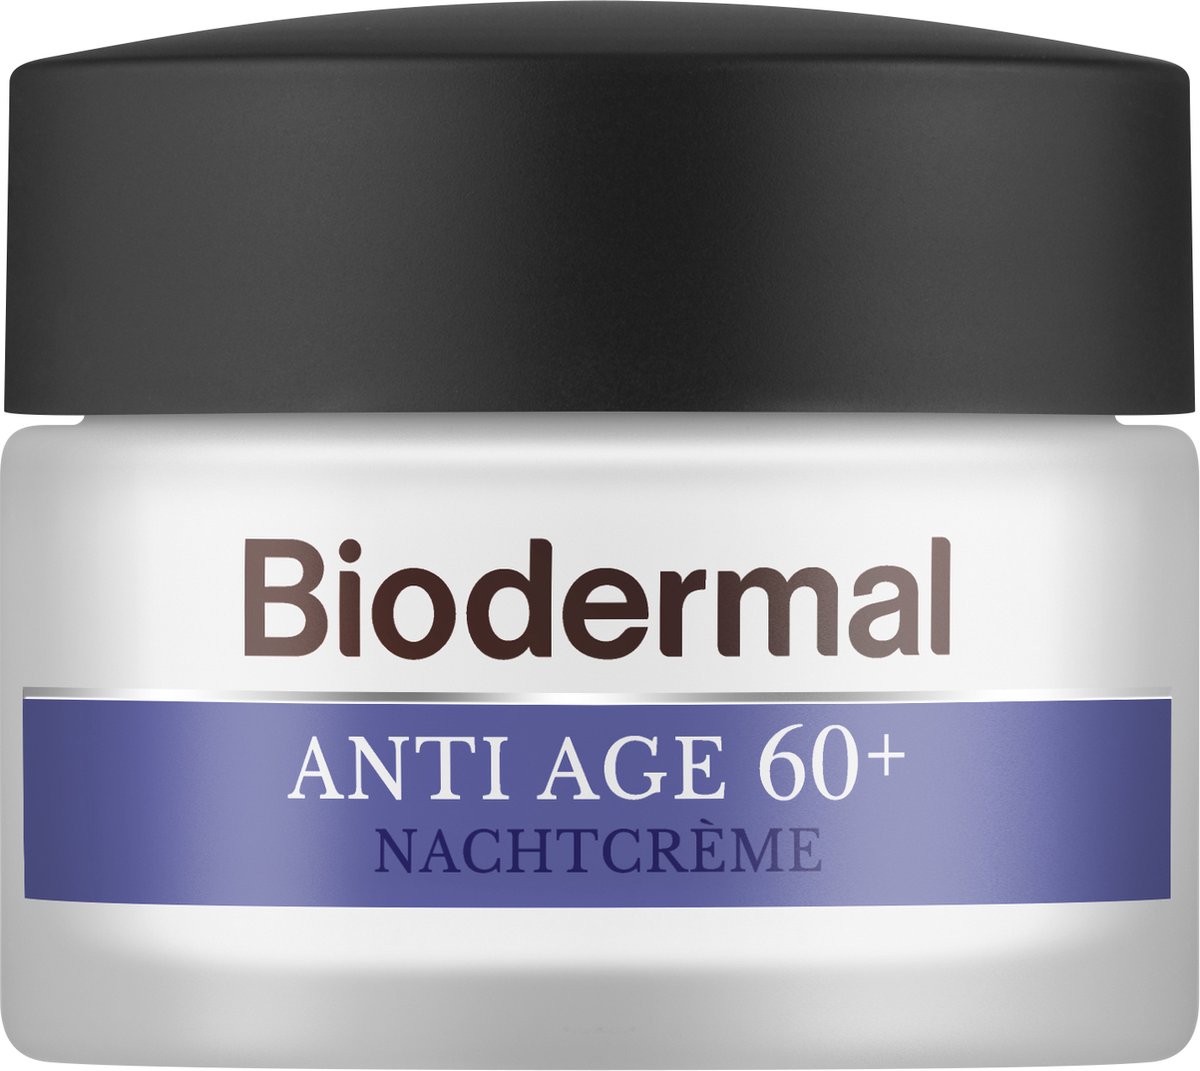 Biodermal Anti Age nachtcrème 60+ - Nachtcrème met niacinamide & sheaboter - Voedt en hydrateert intensief - Nachtcreme anti rimpel voor vrouwen - 50ml - Biodermal